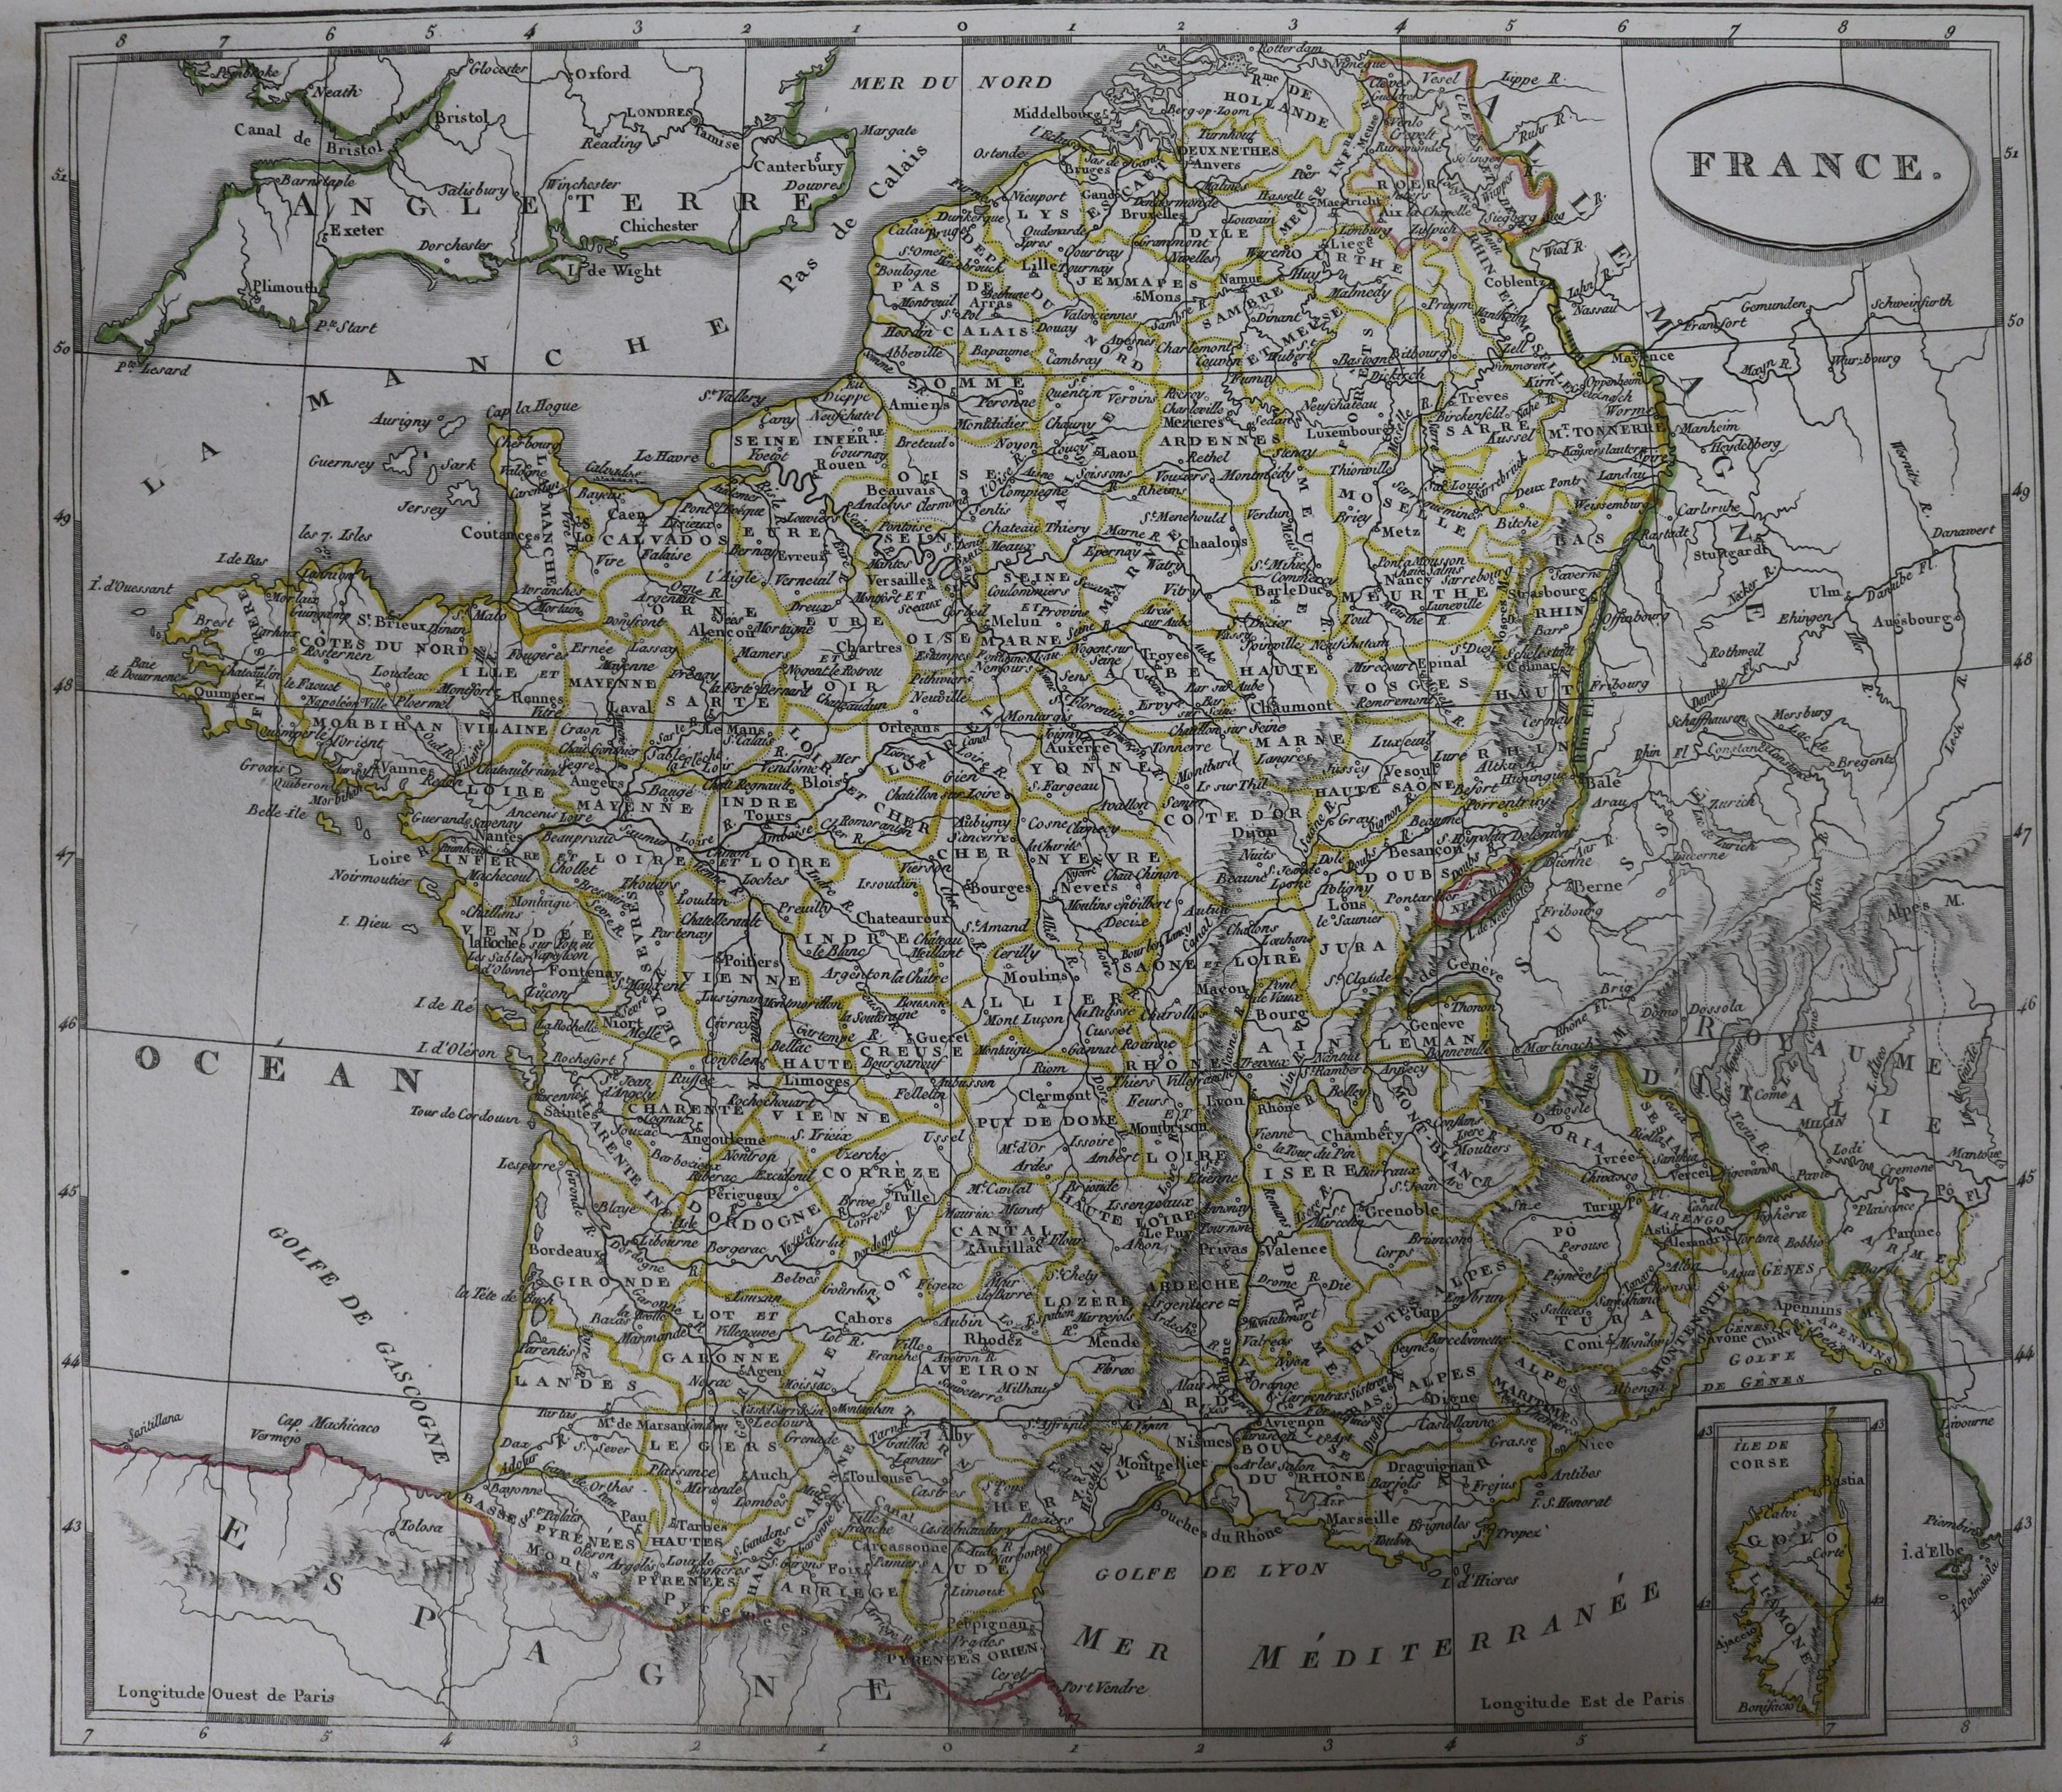 Monin, Charles - Atlas Classique de la Geographie Ancienne, quarto, quarter calf, worn, 38 maps